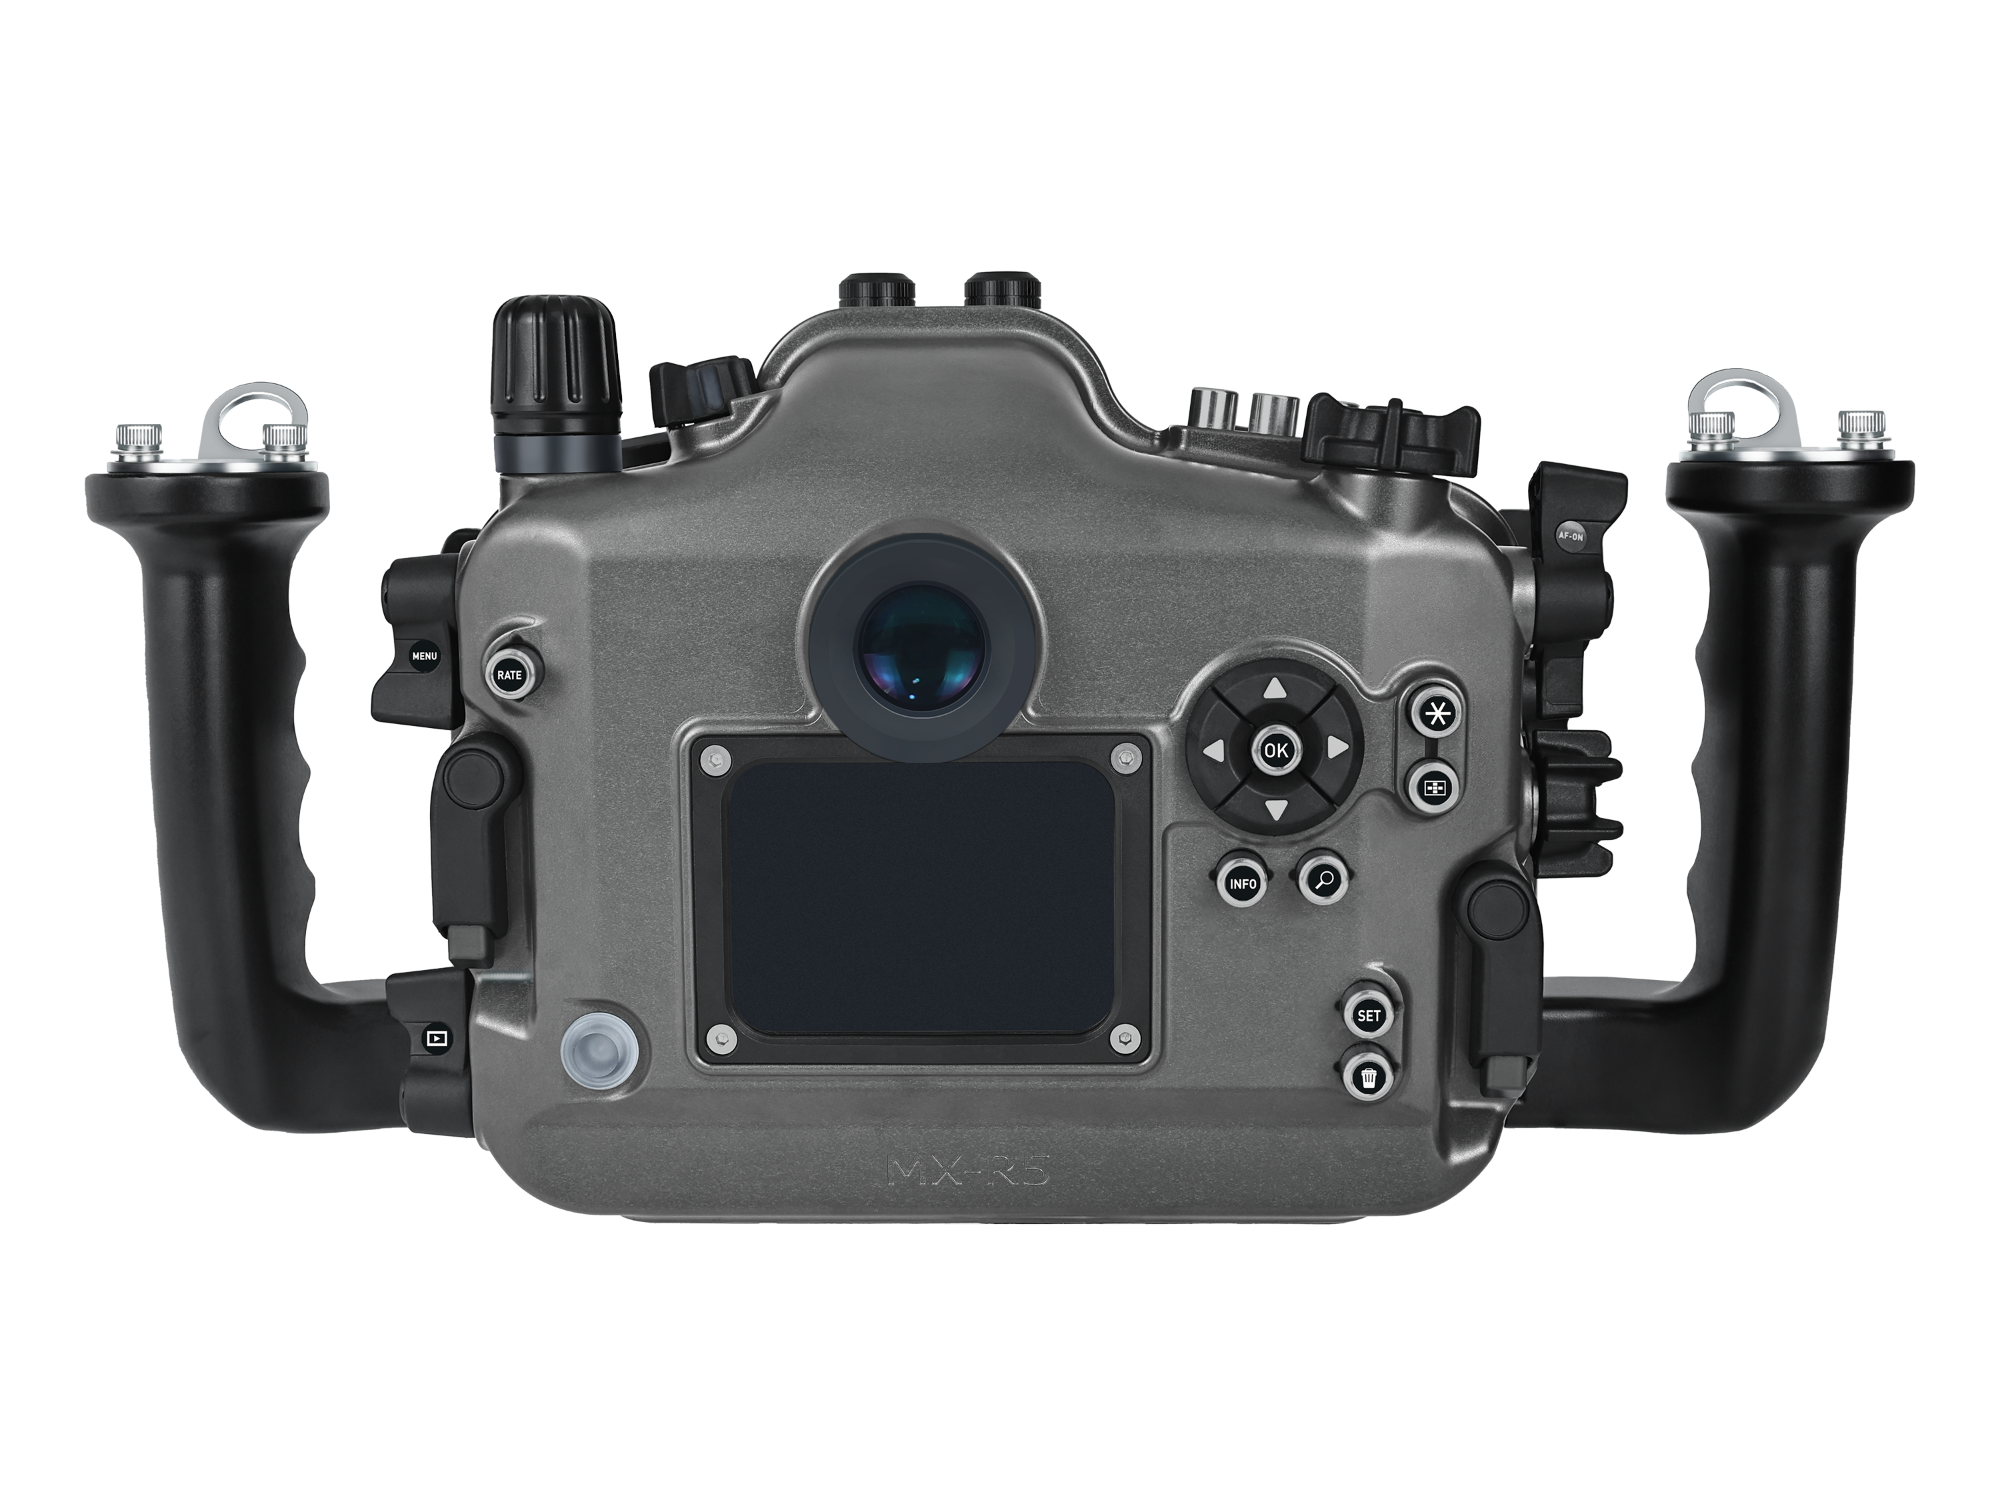 MX-R5 Housing for Canon EOS R5 Mirrorless Digital Camera